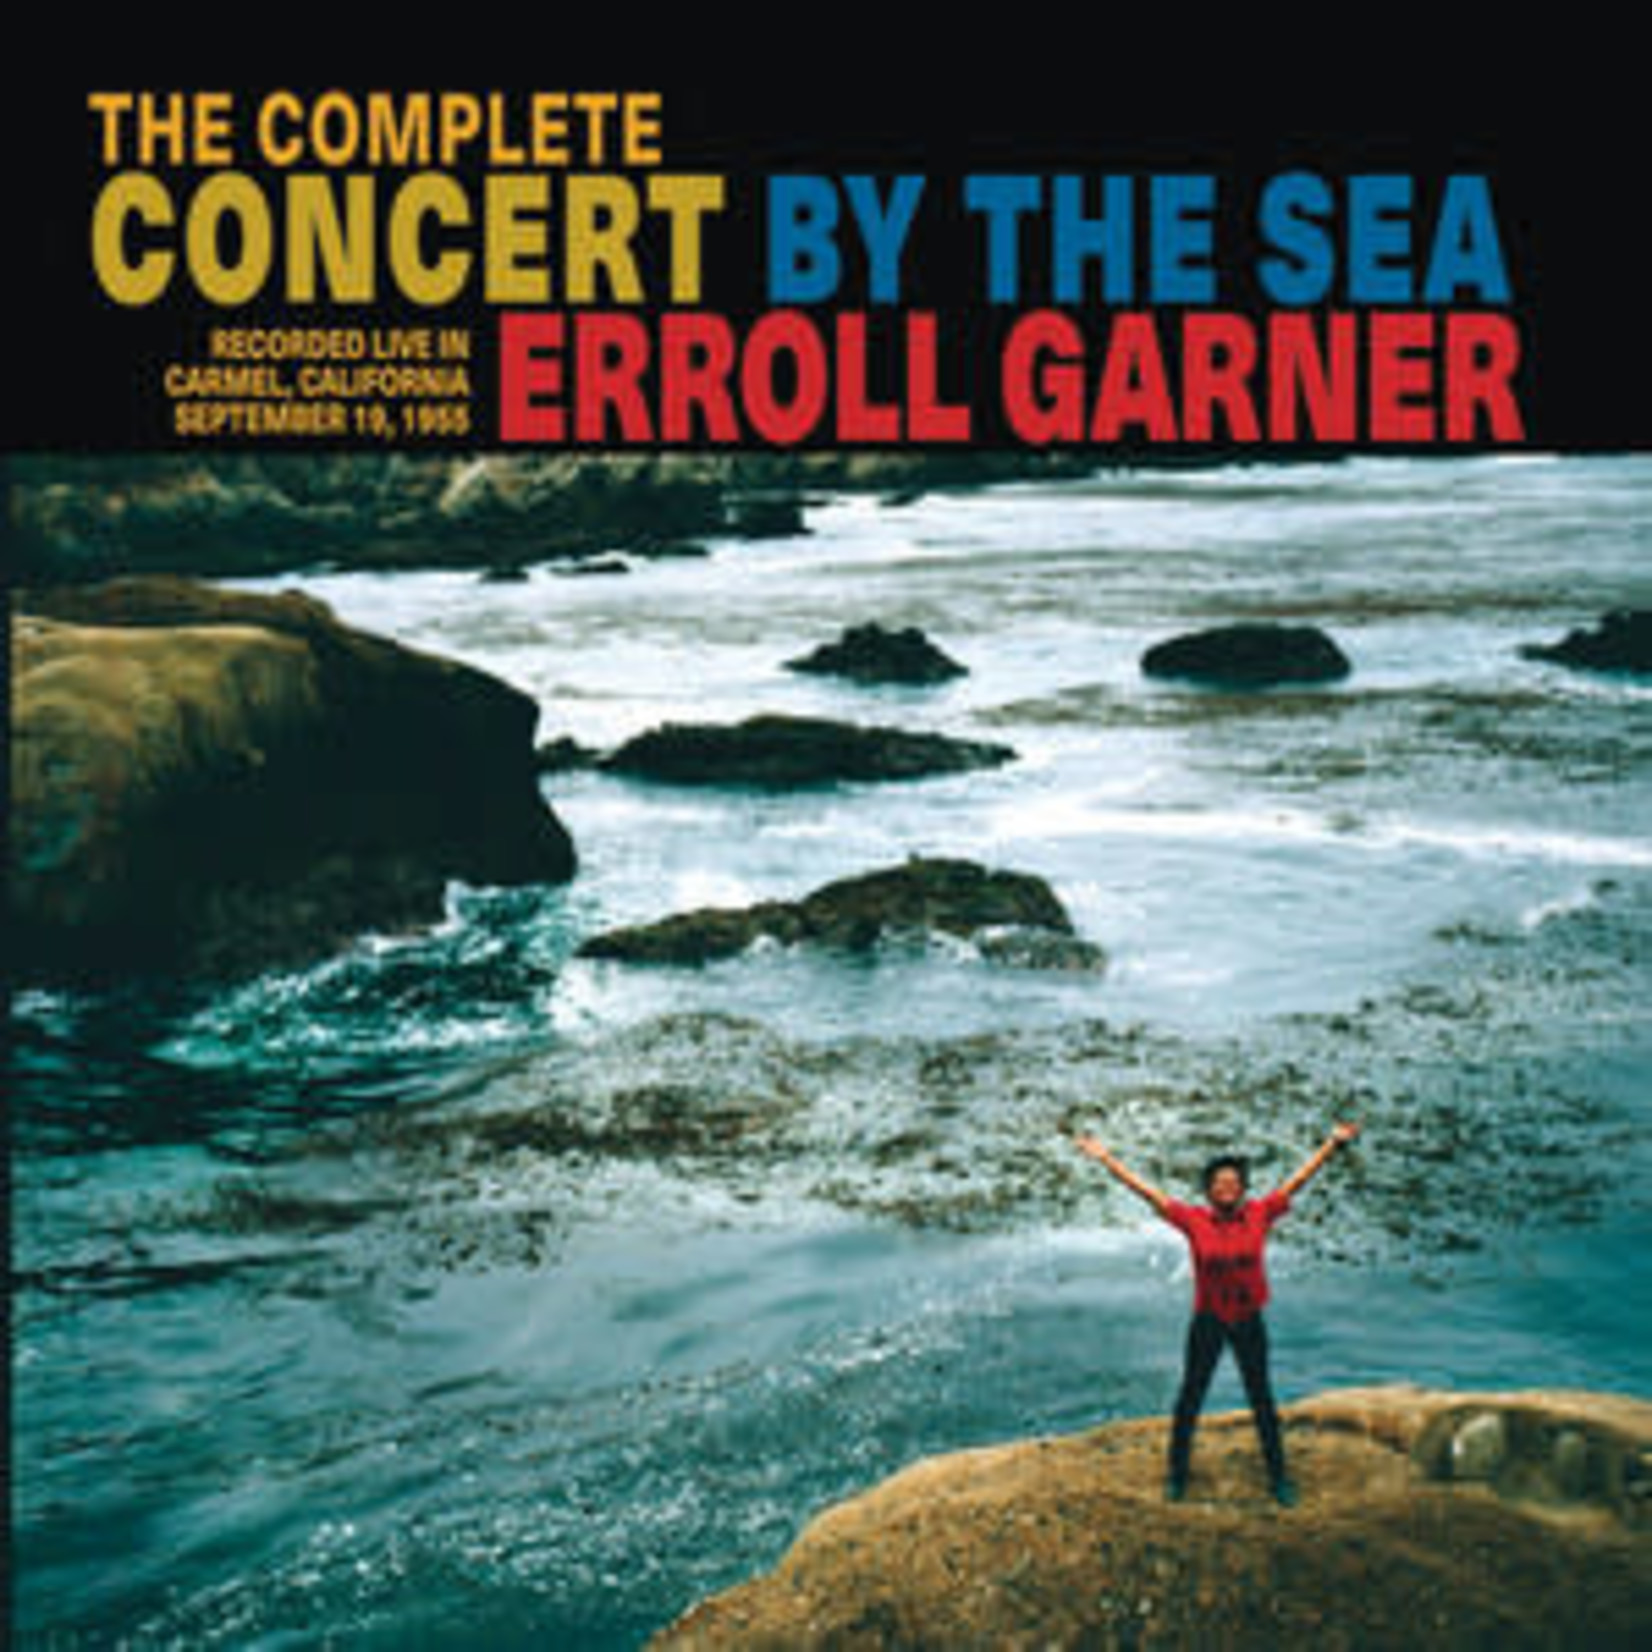 [Vintage] Erroll Garner - Concert by the Sea